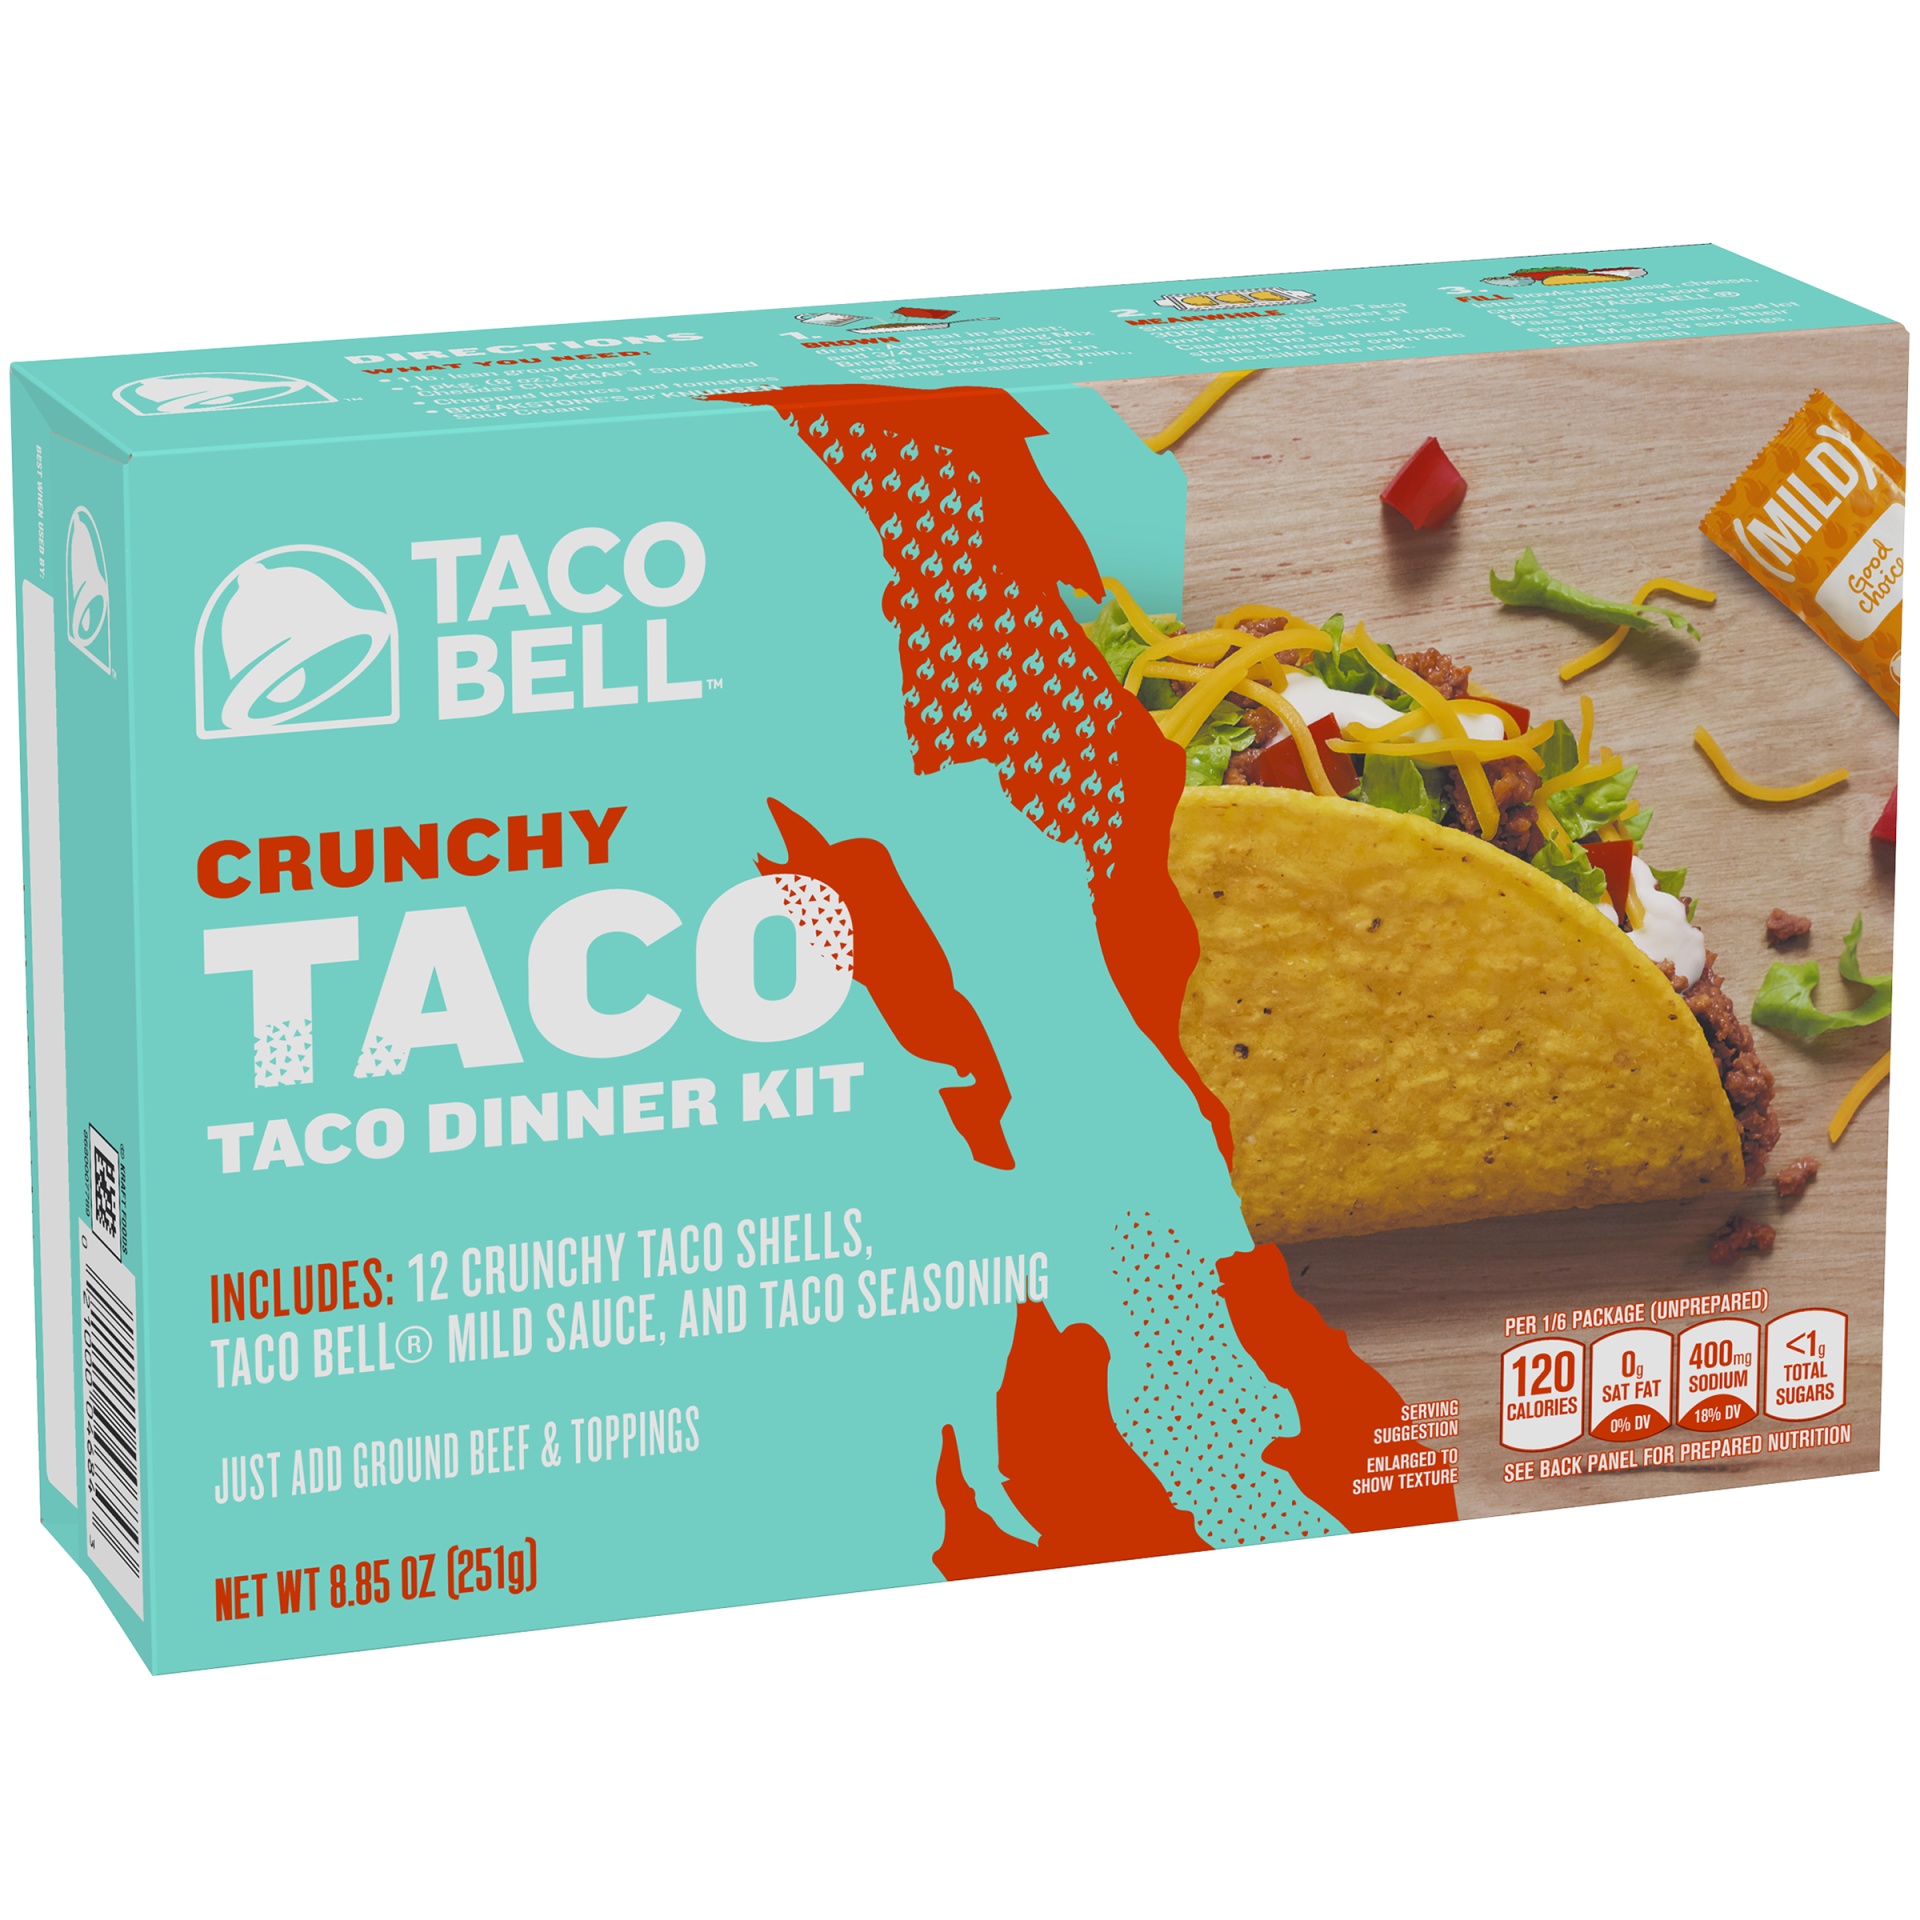 slide 7 of 11, Taco Bell Crunchy Taco Dinner Kit with 12 Crunchy Taco Shells, Taco Bell Mild Sauce & Seasoning, 8.85 oz